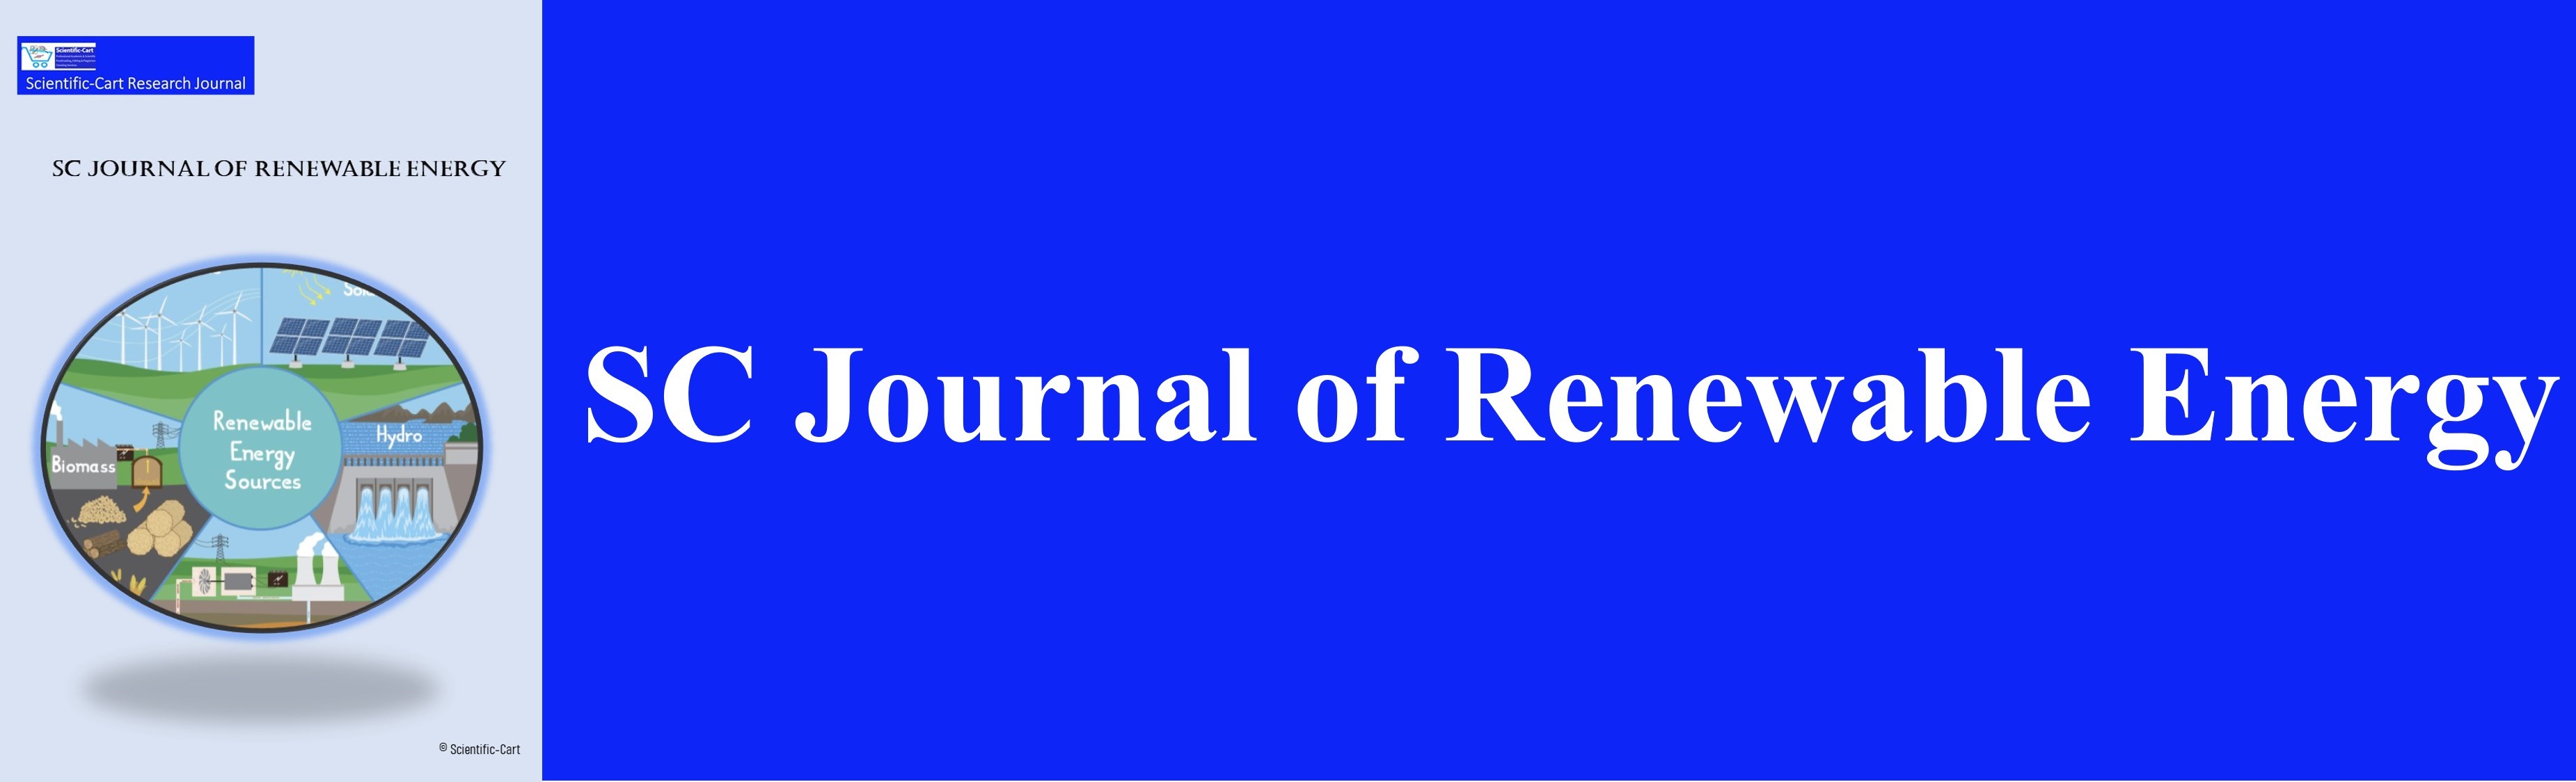 SC Journal of Renewable Energy